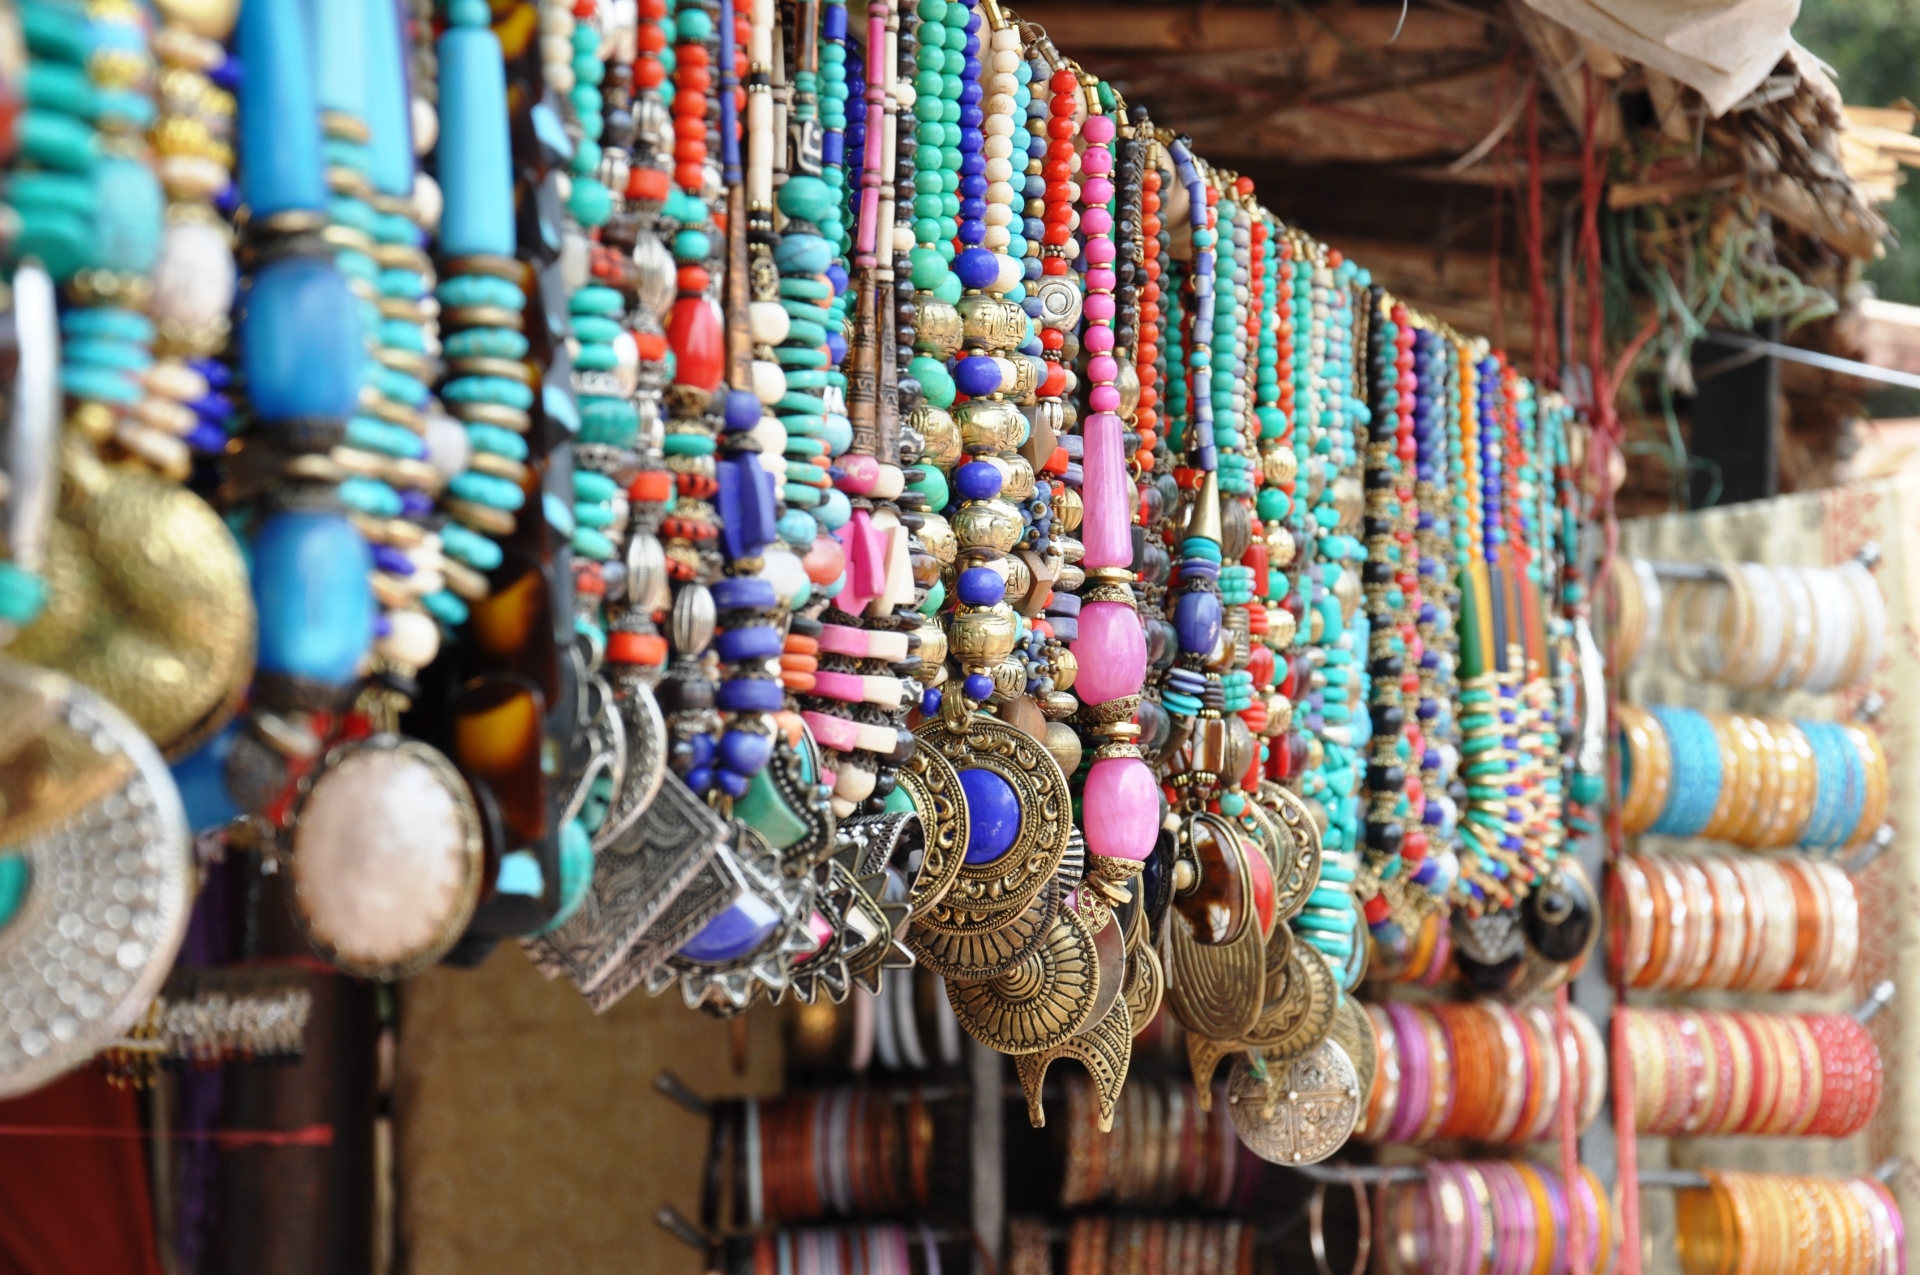 Markets of Jaipur